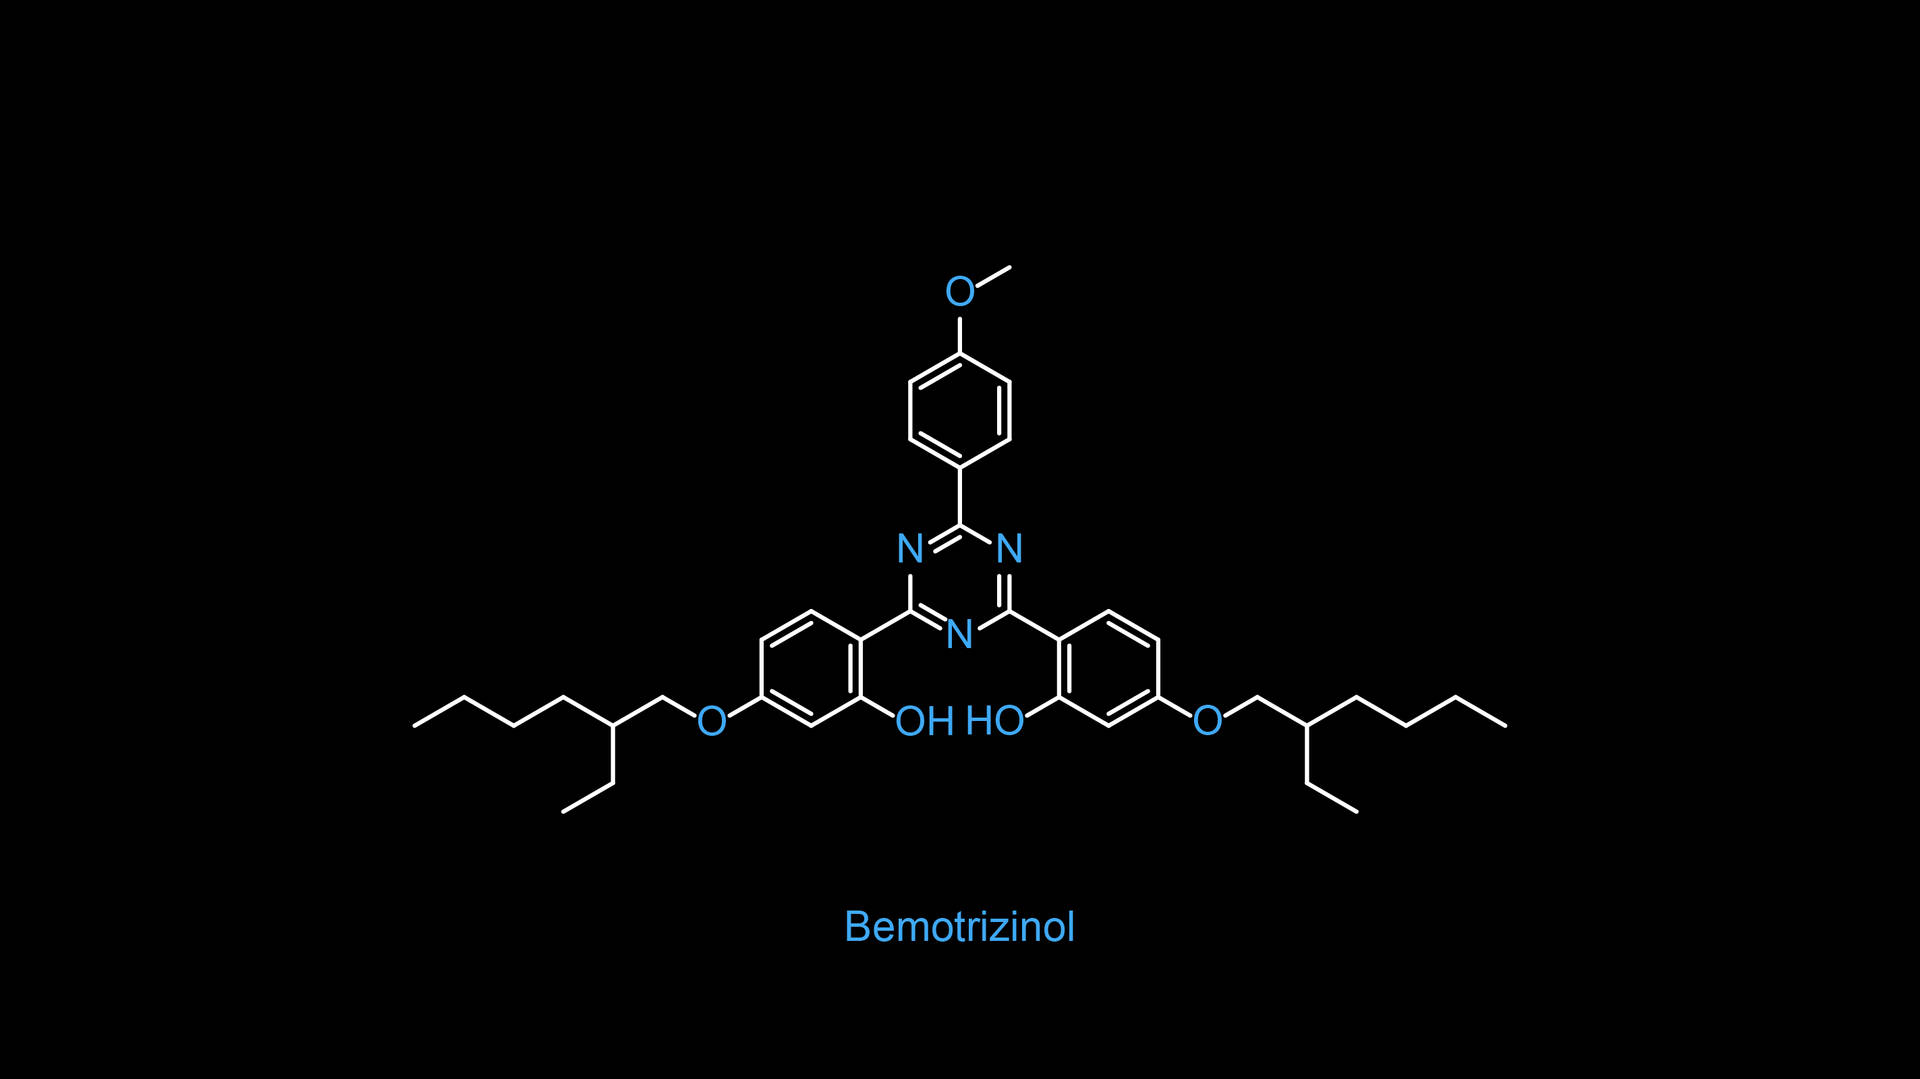 Chemistry Beyond - Bemotrizinol Chemical Formula Background